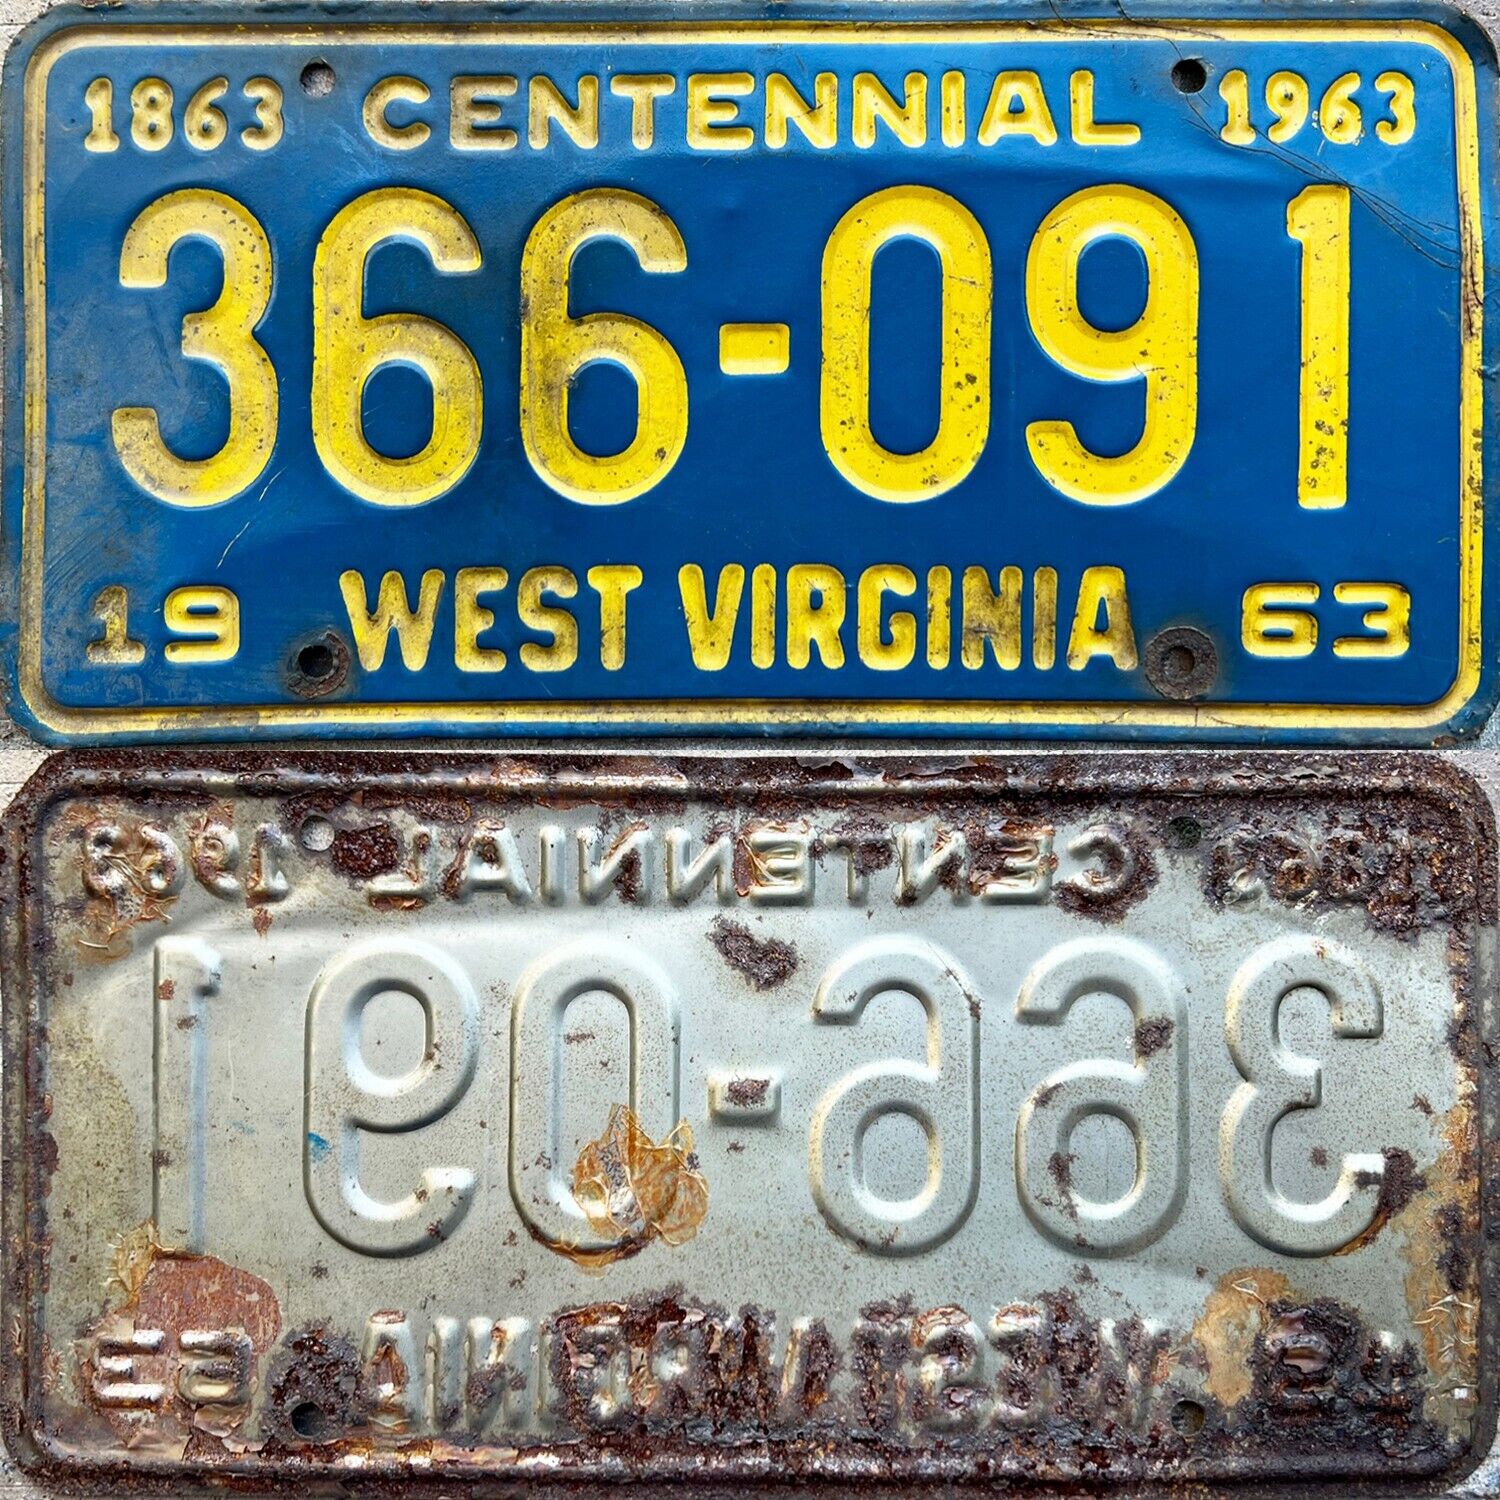 1963 West Virginia 1863 Centennial License Plate can be re-registered Original